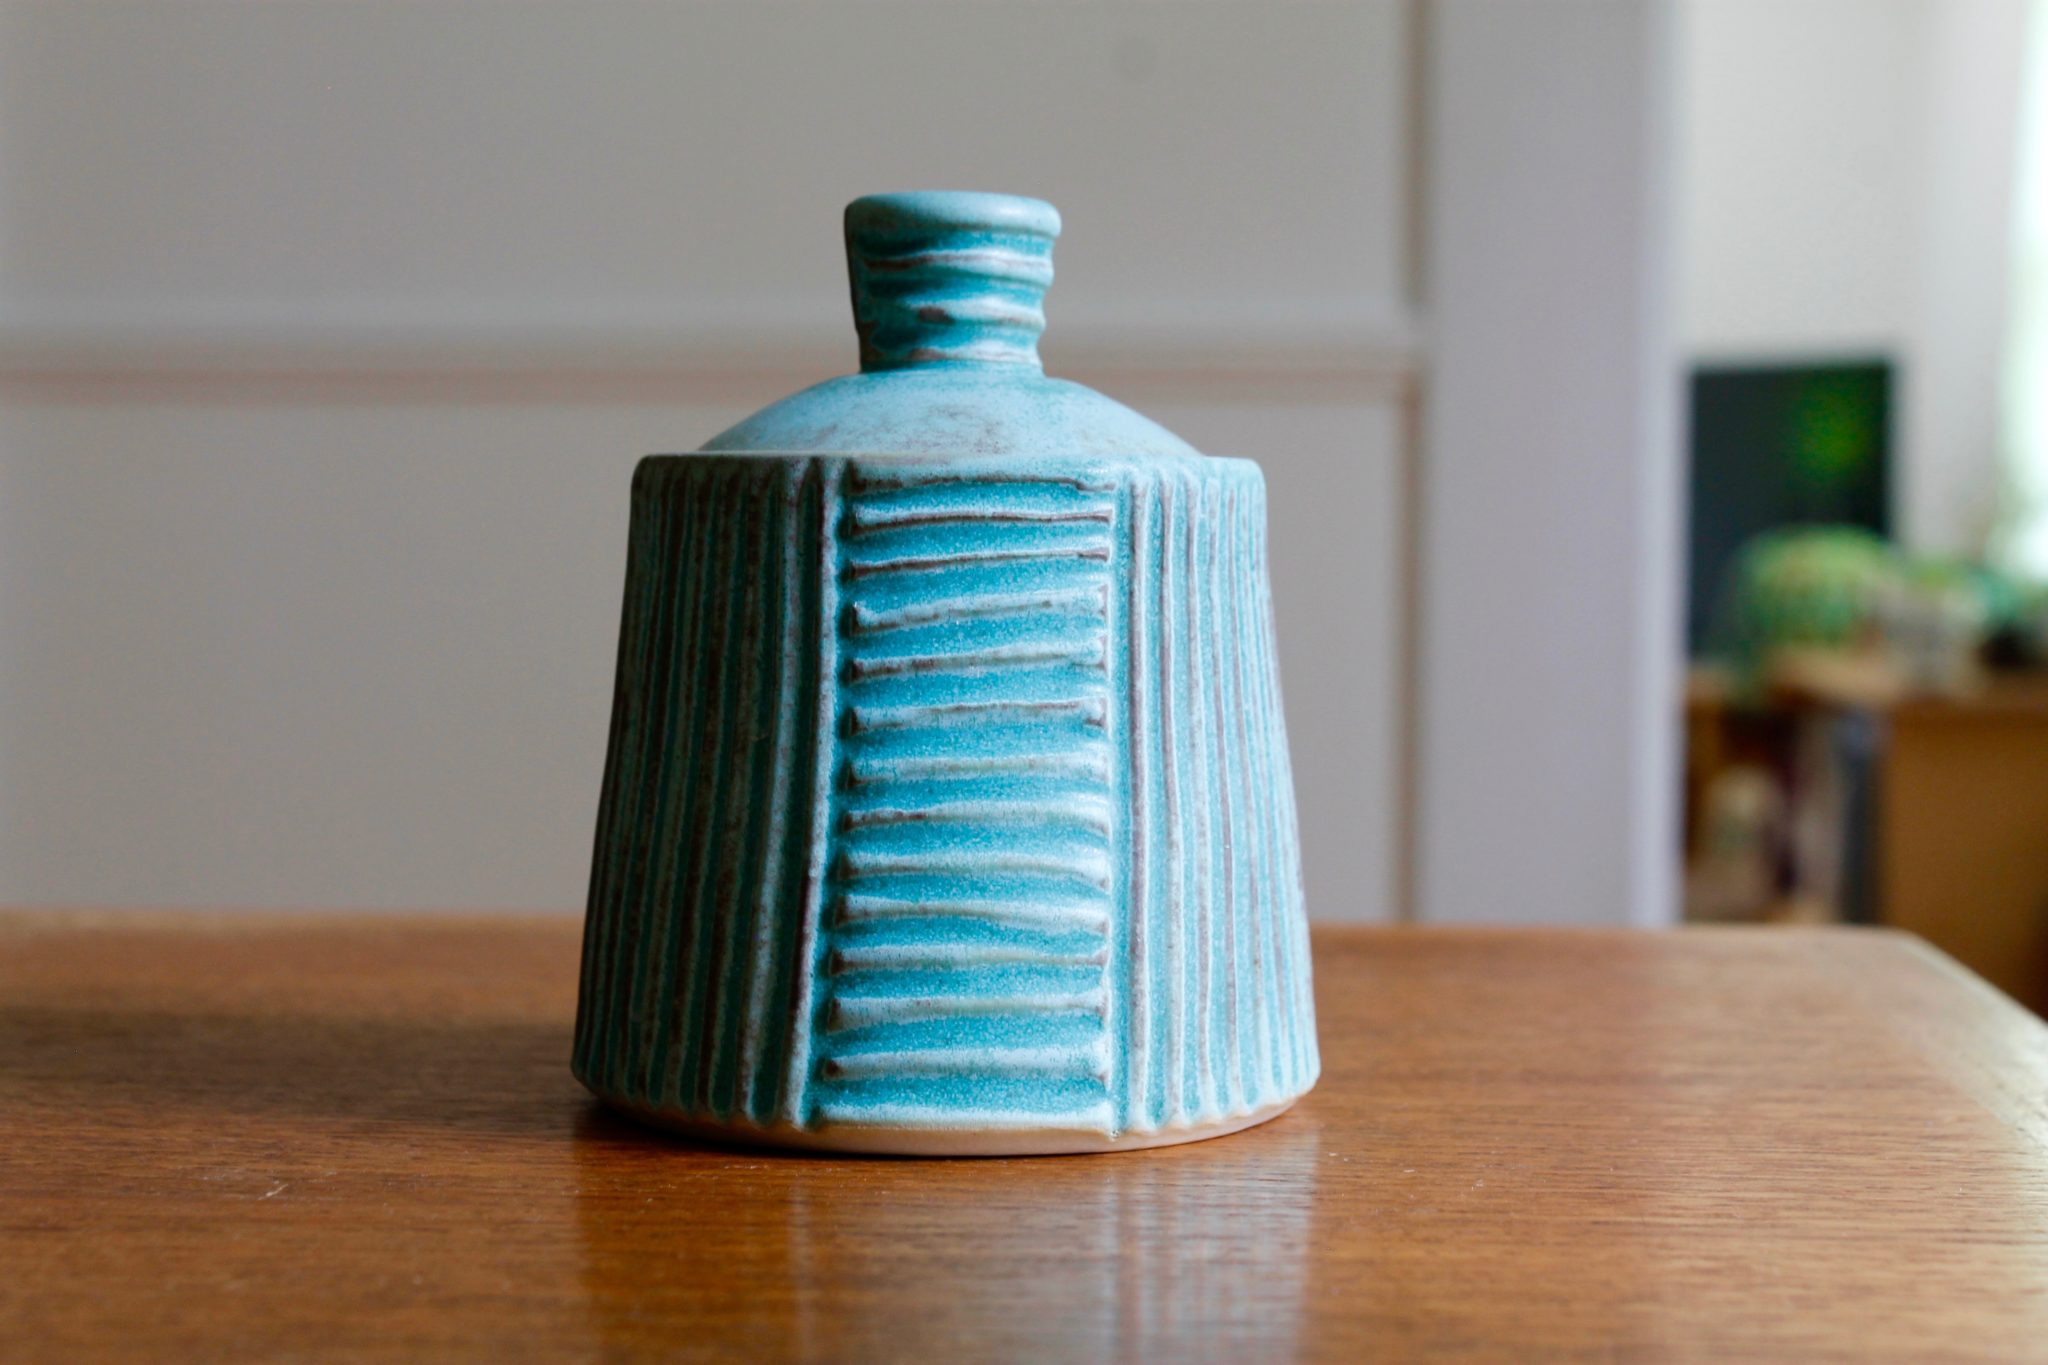 Turquoise pottery honey pot